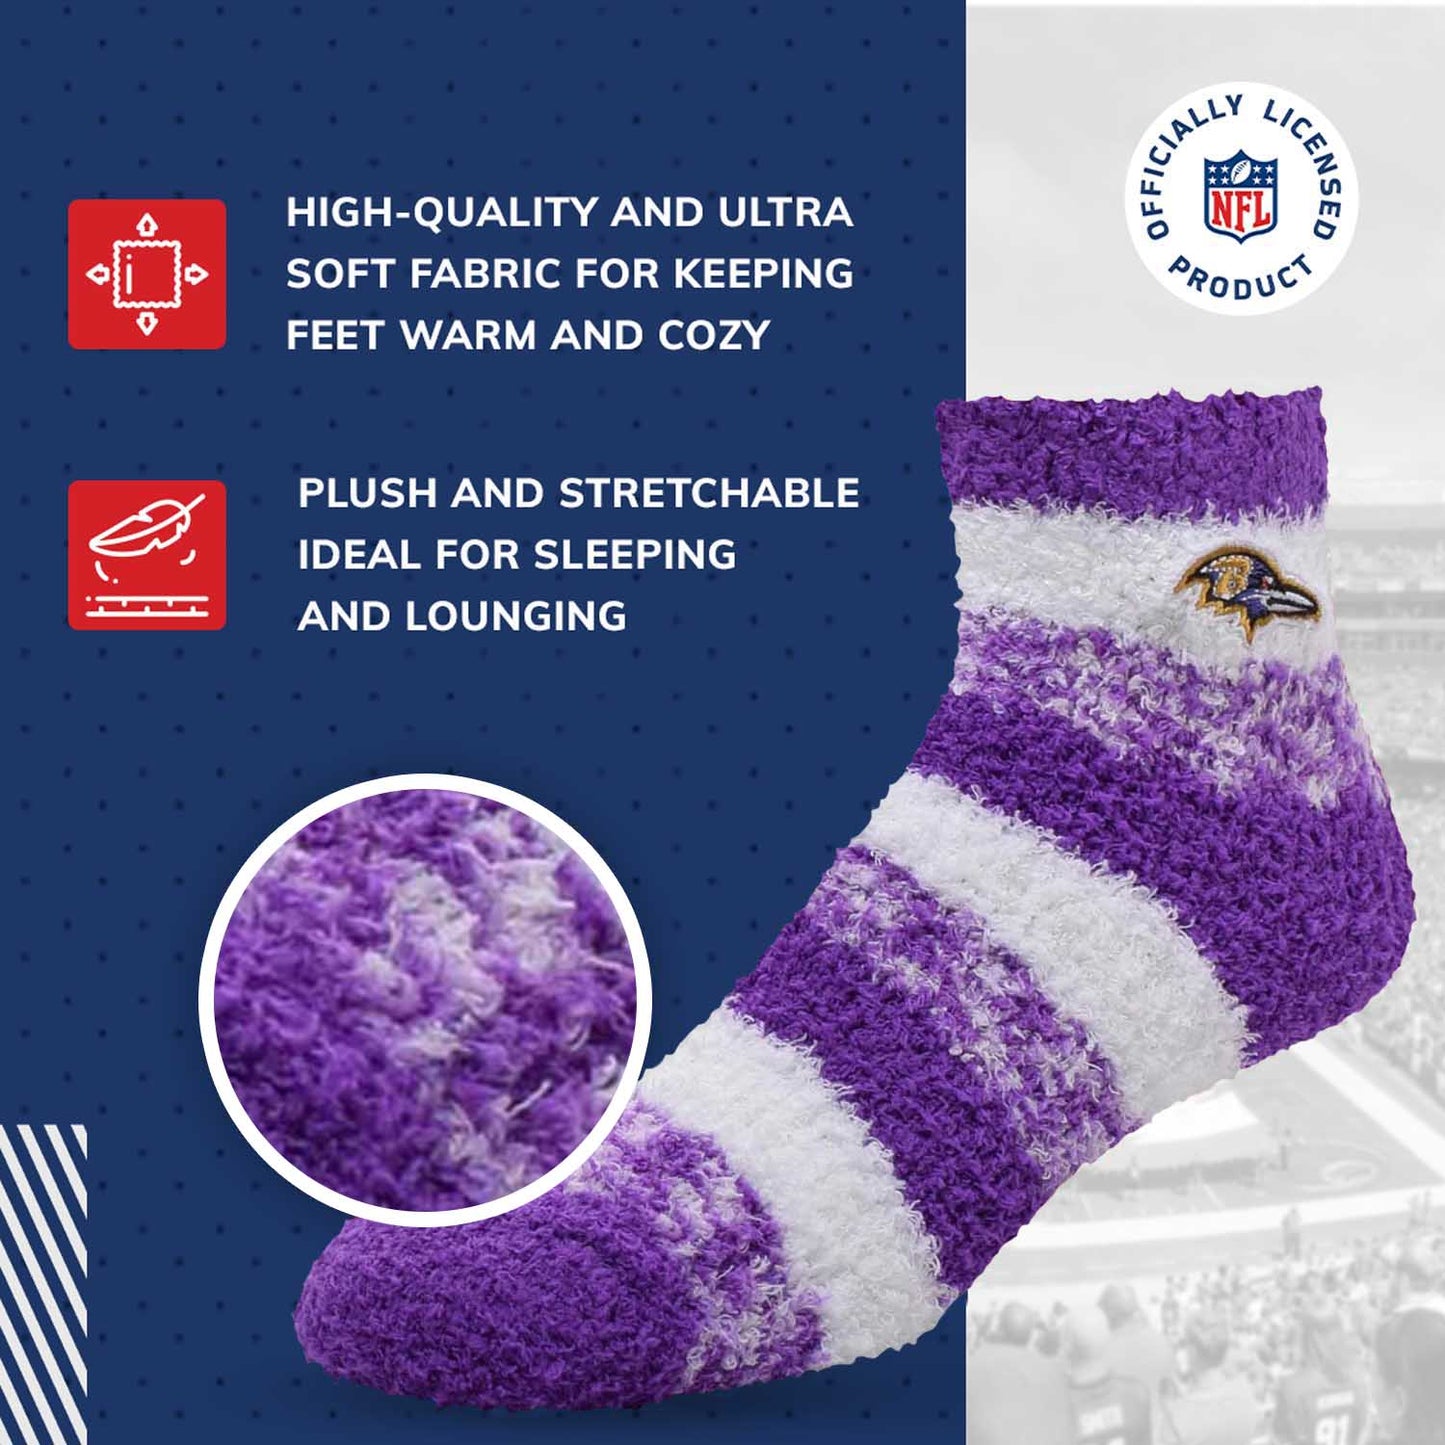 Baltimore Ravens NFL Cozy Soft Slipper Socks - Purple